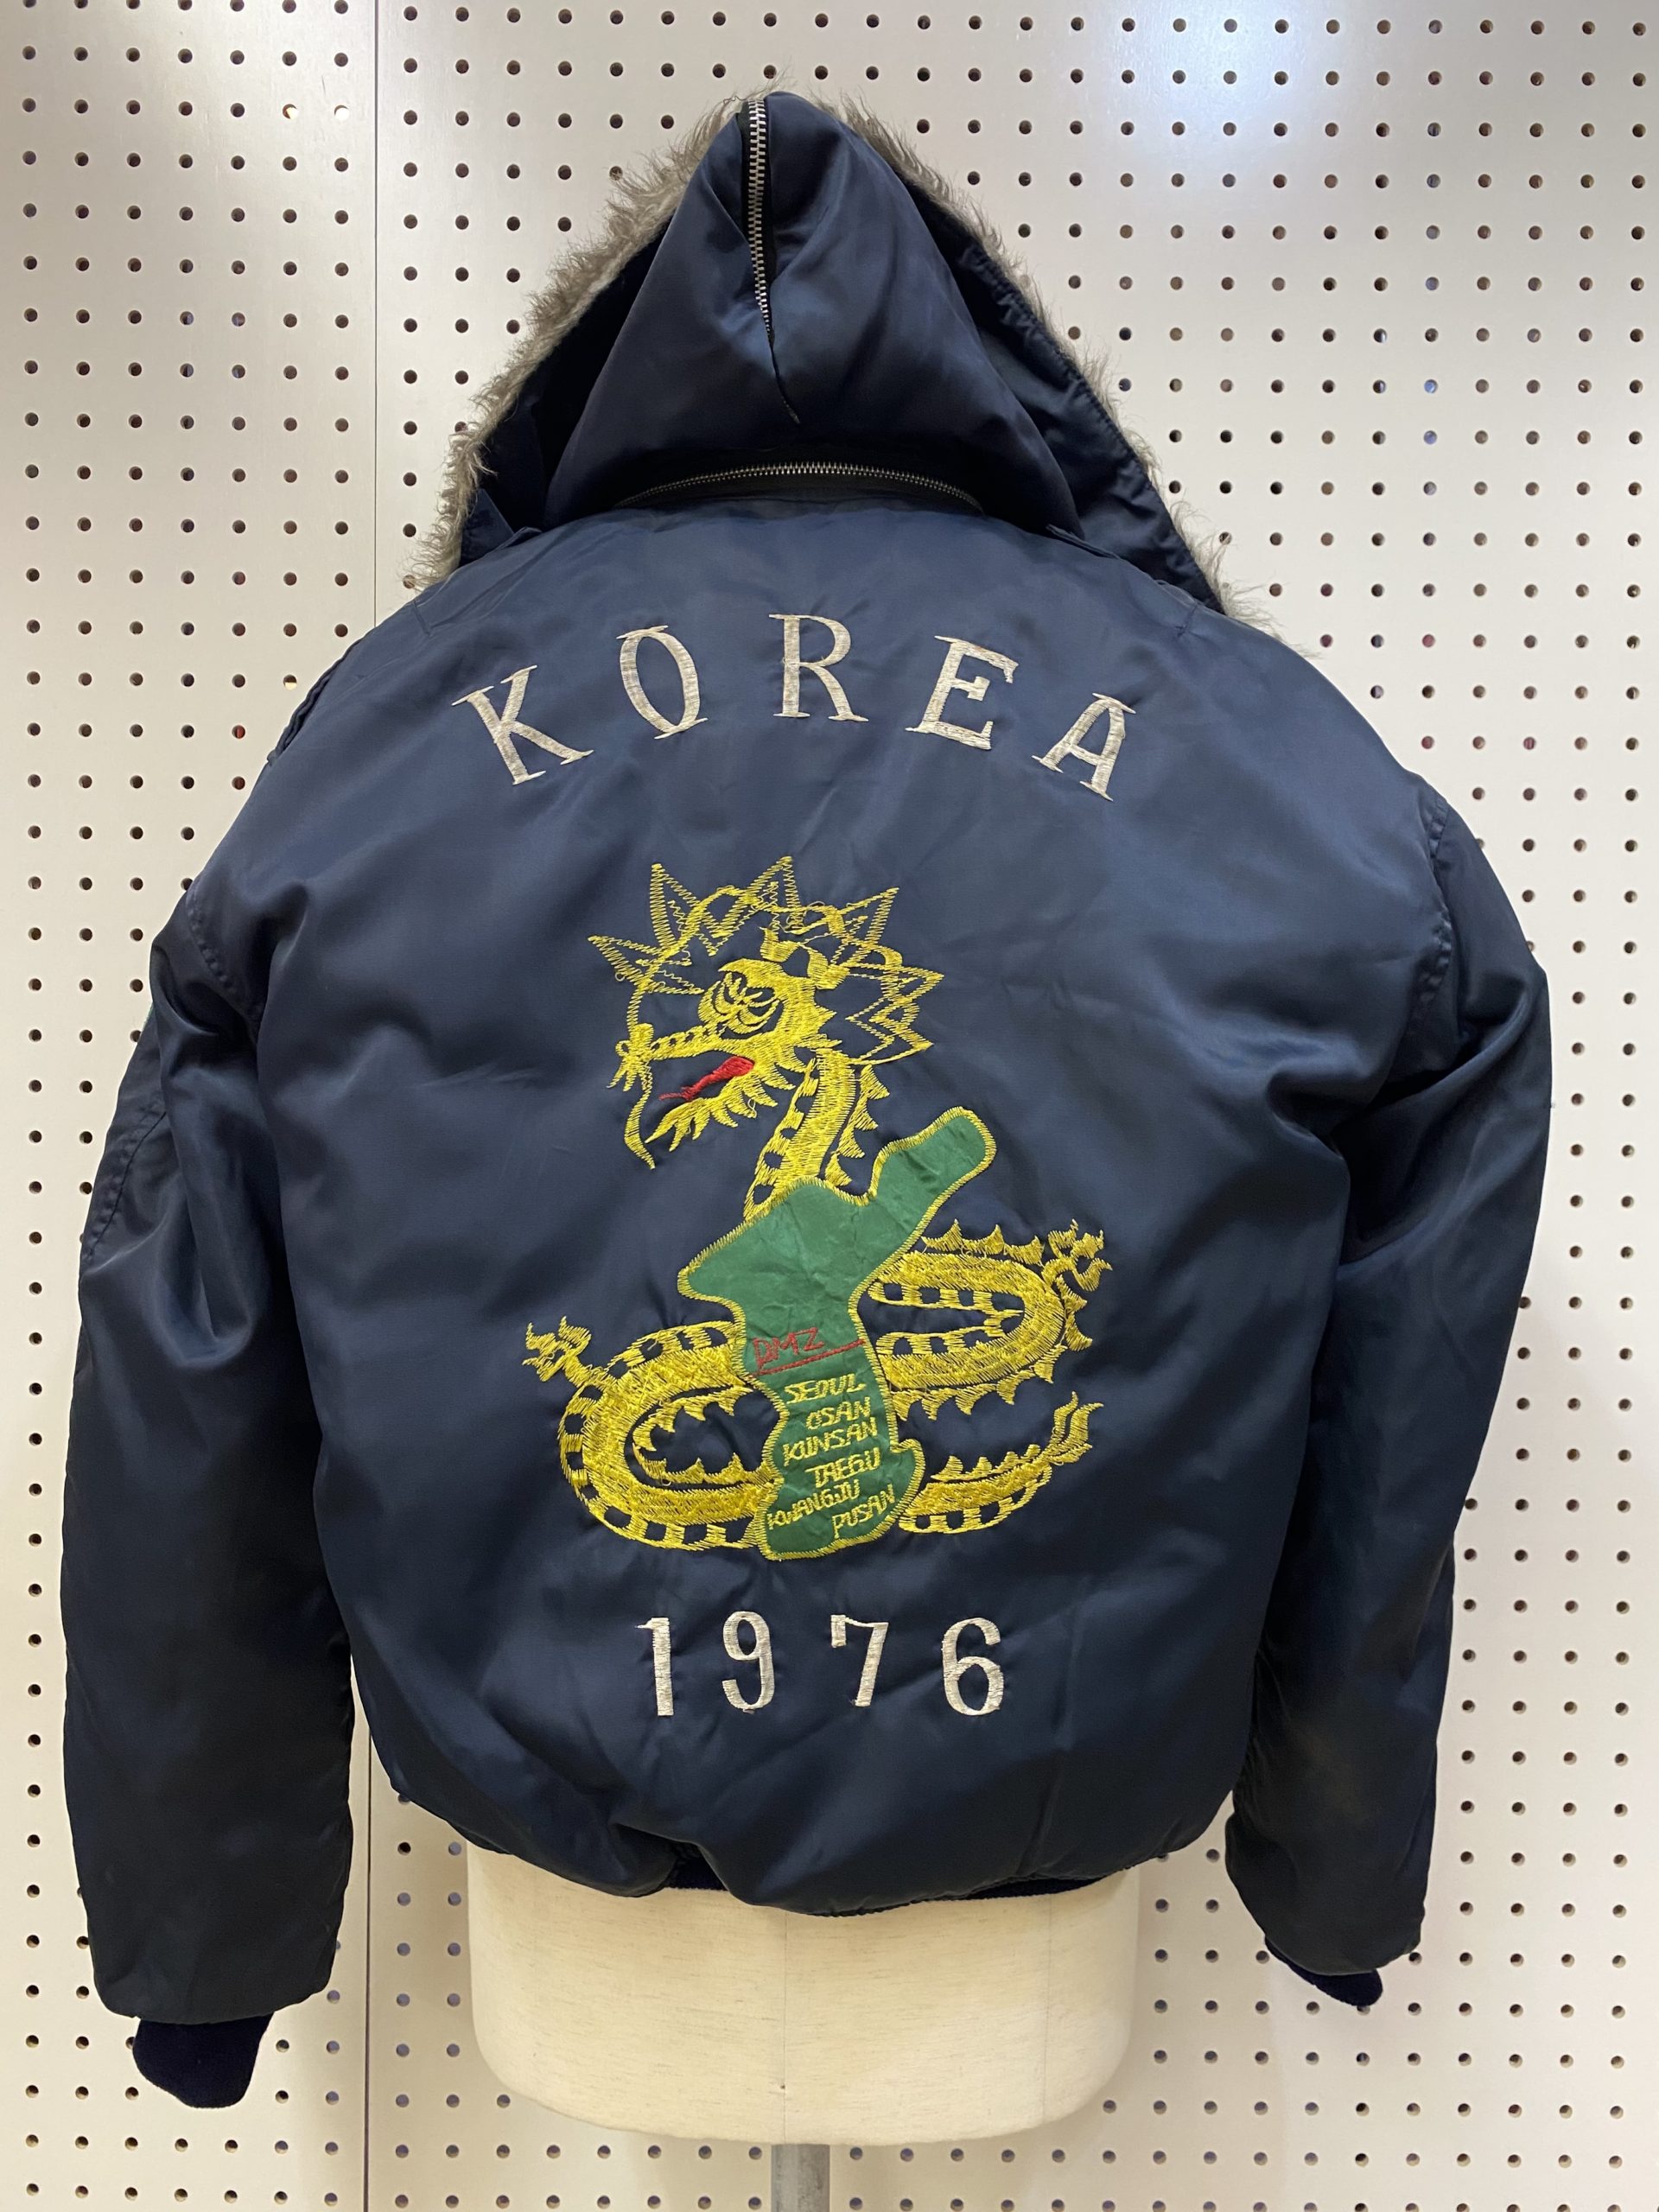 1970s コリア スーベニアジャケット 1976 | 京都アンティーク